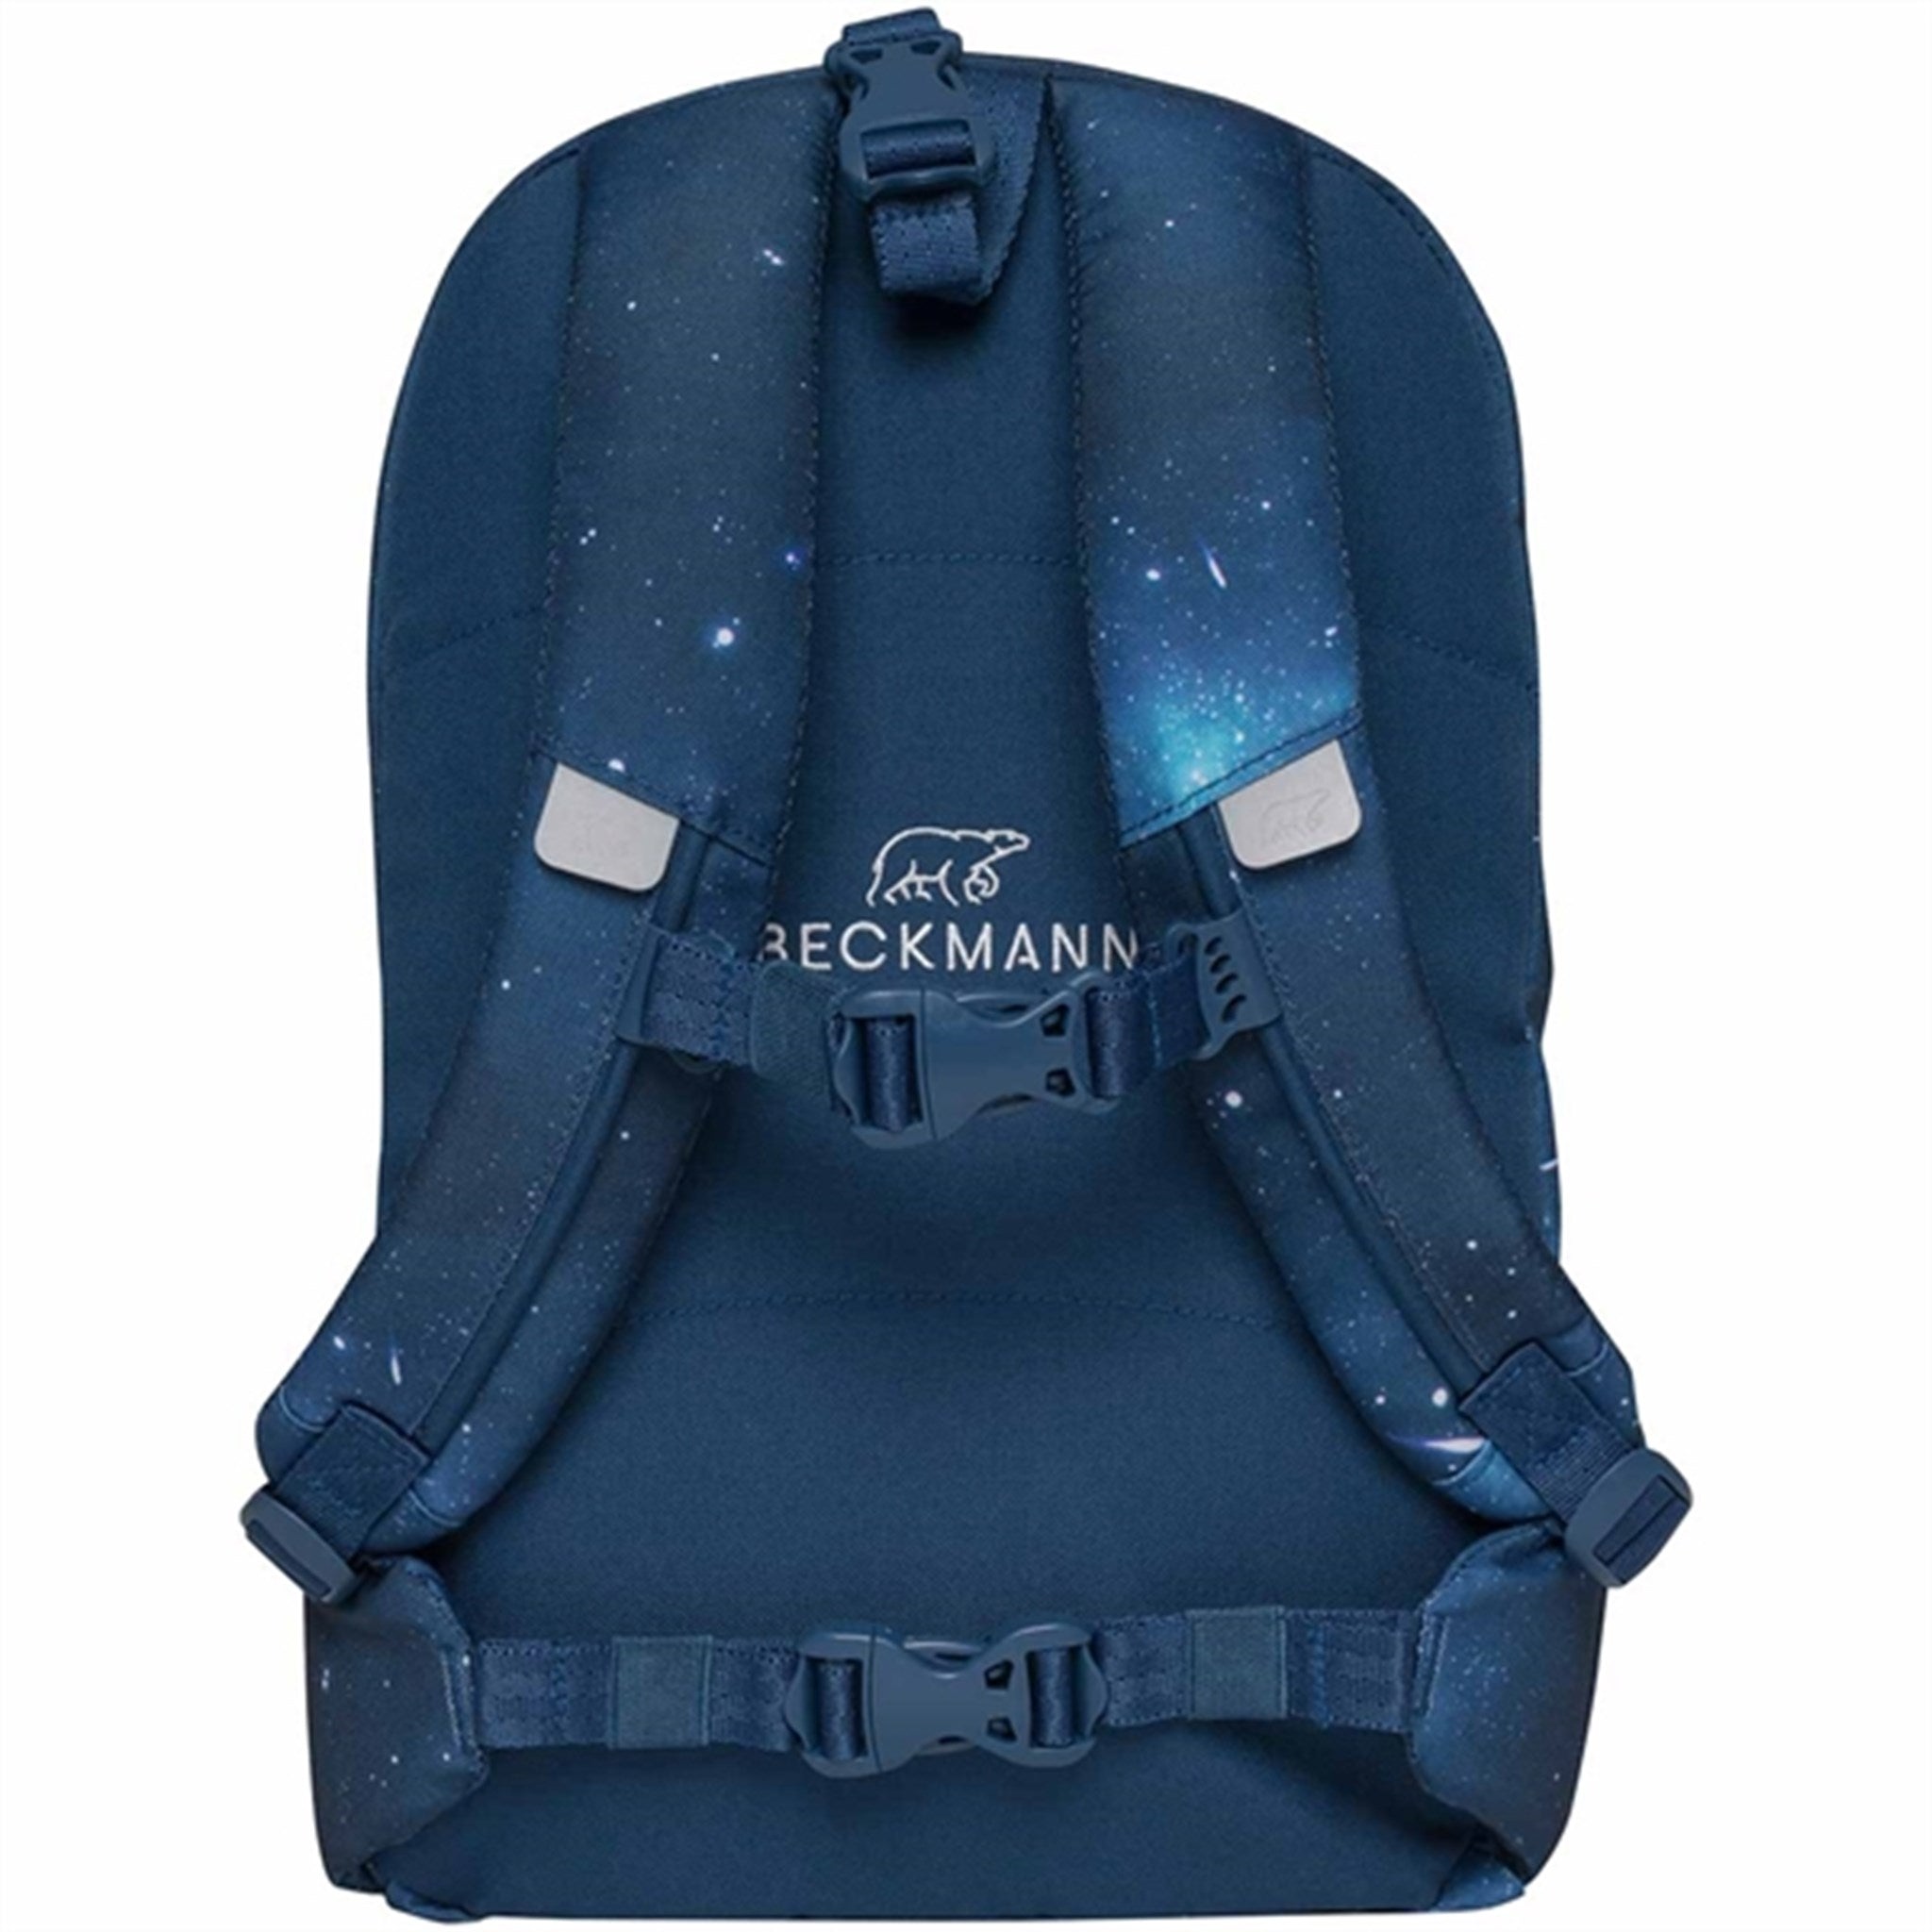 Beckmann Gymnastik/Tur Väska Space Mission 2